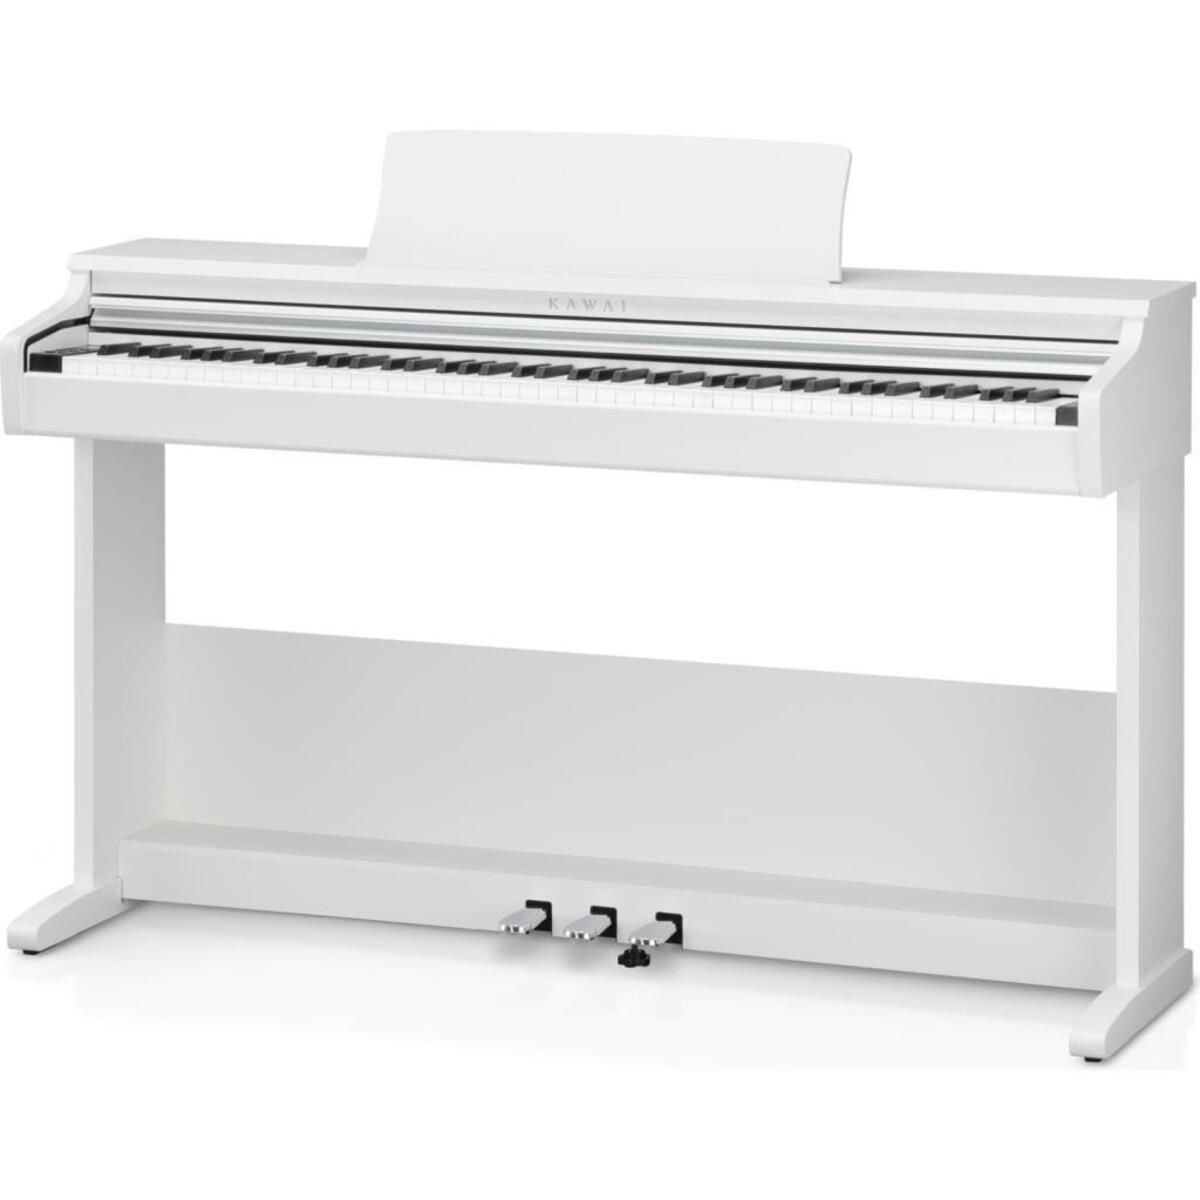 Kawai Kdp75w Beyaz Dijital Piyano (TABURE & KULAKLIK HEDİYELİ)